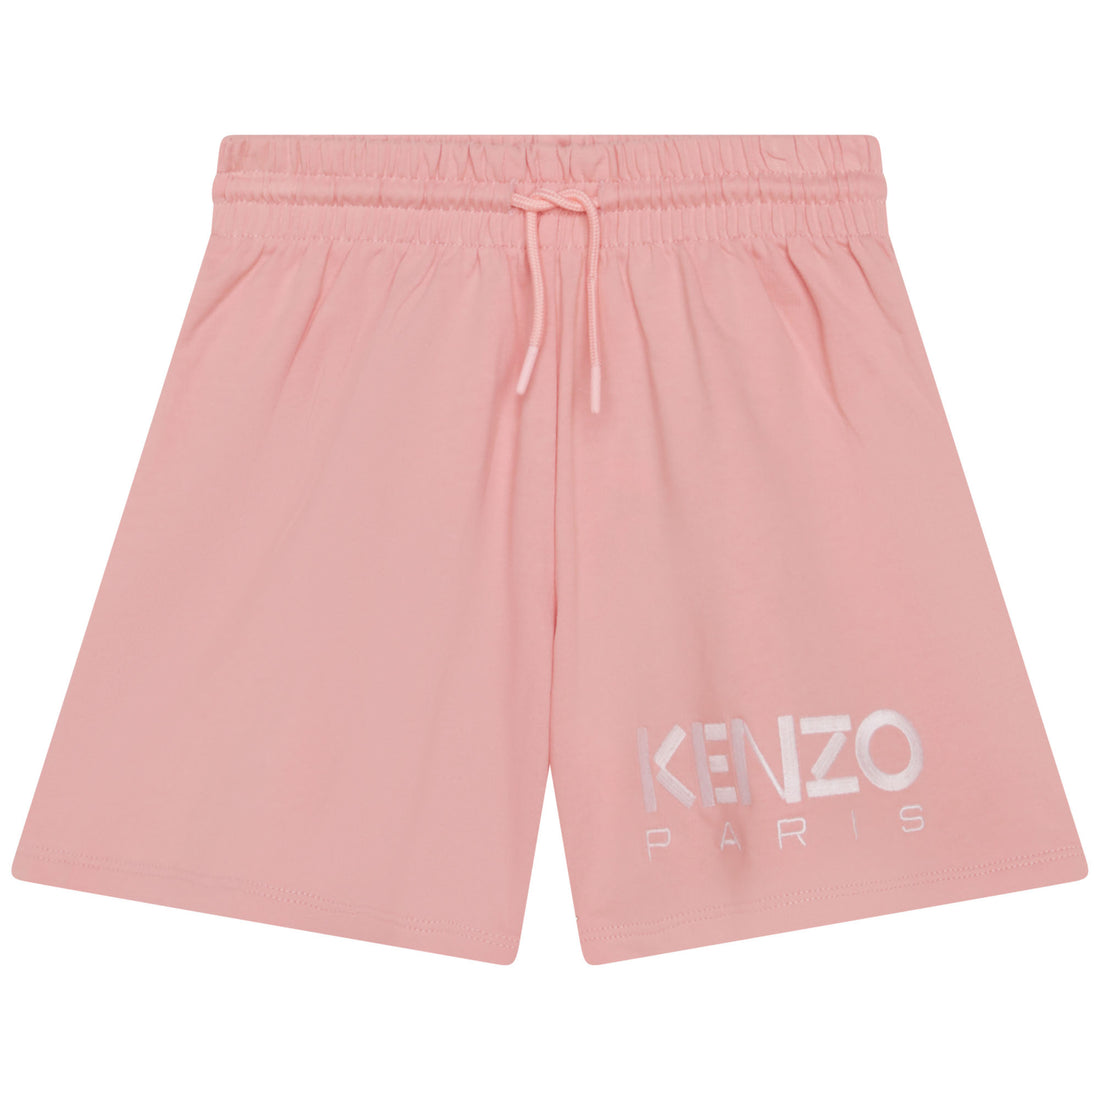 Kenzo Short Style: K14253